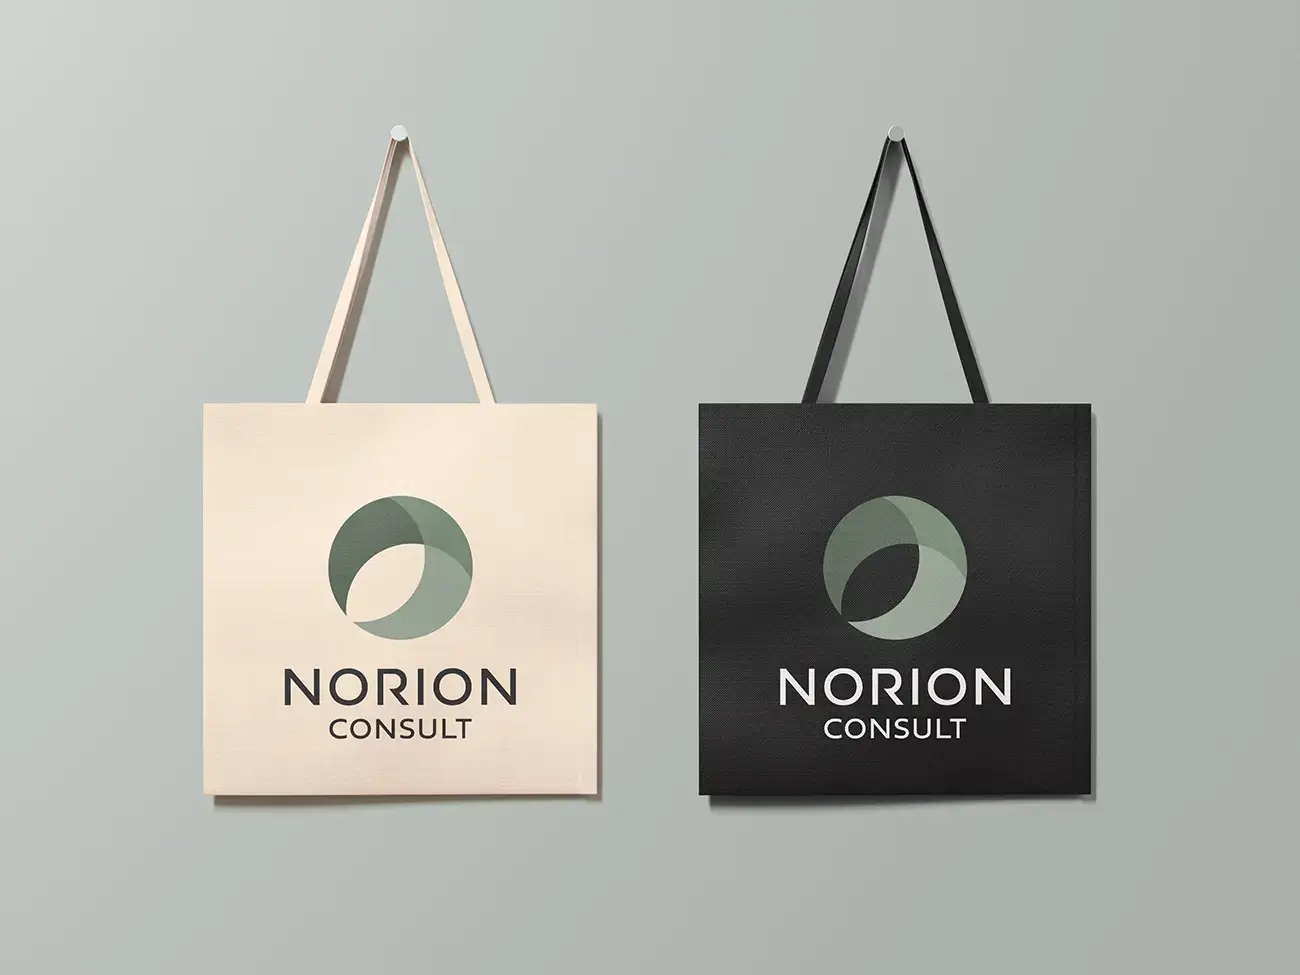 Norion consult firmalogo design på to poser